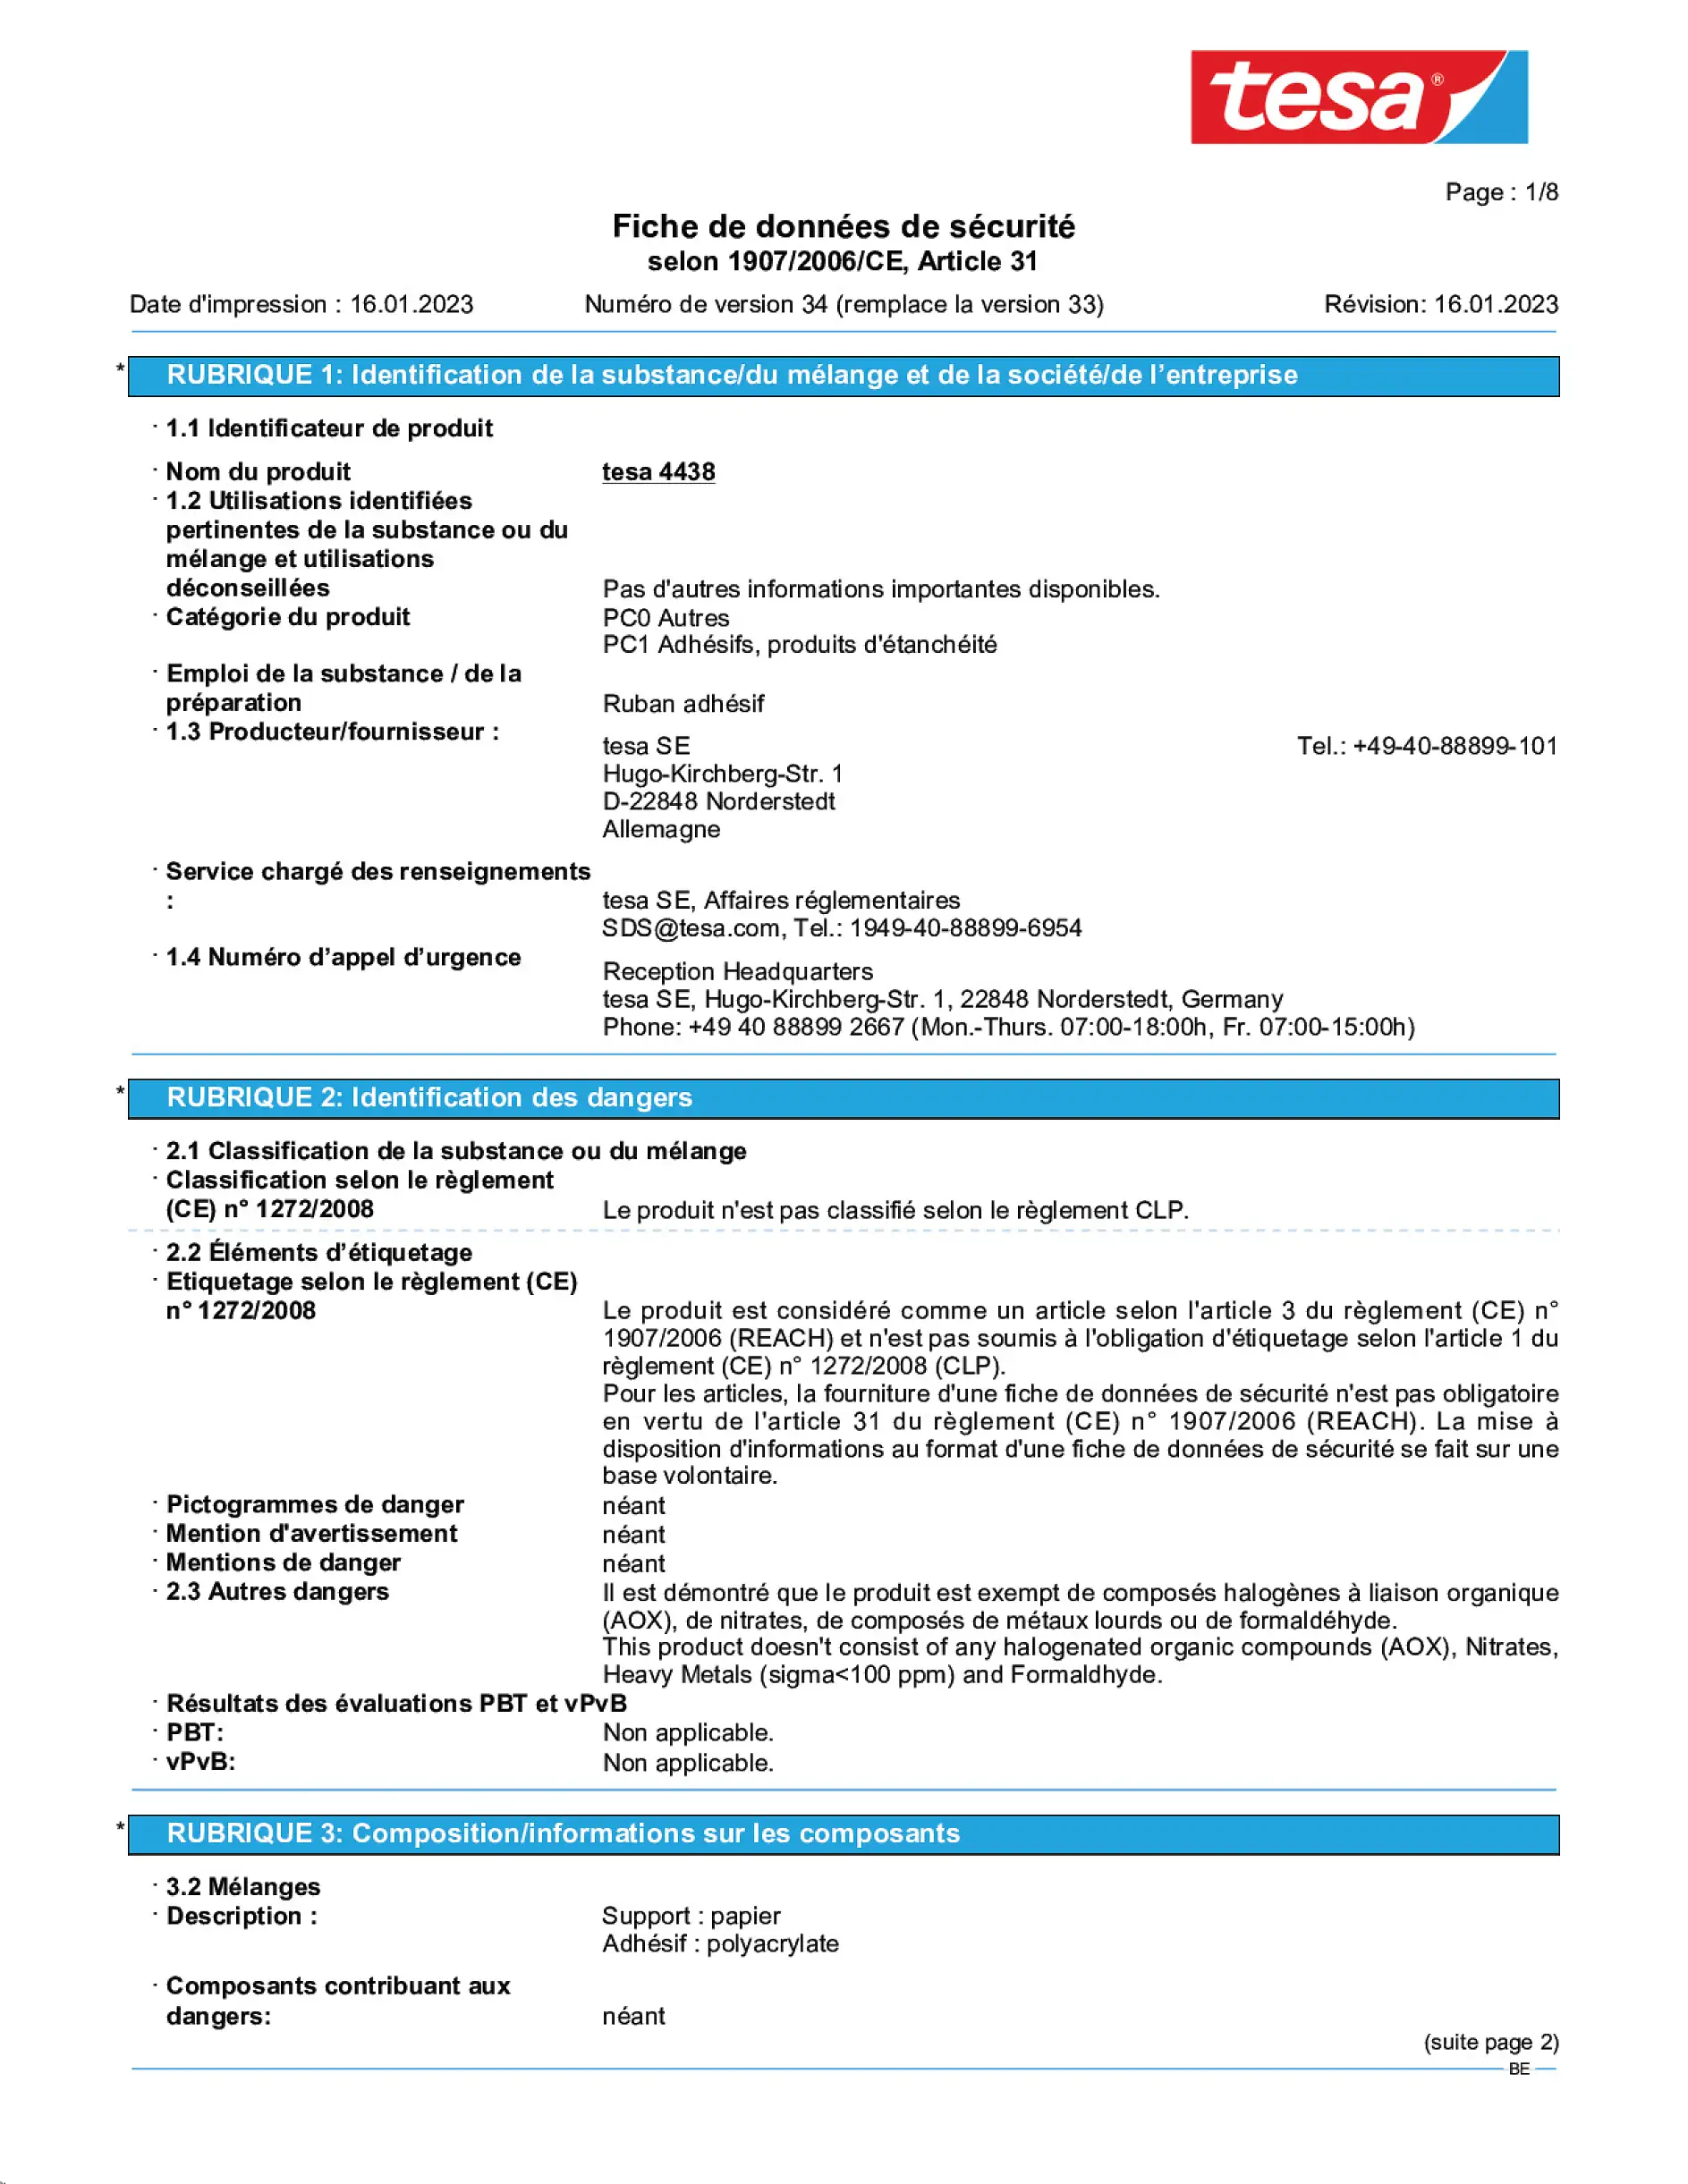 Safety data sheet_tesa® Professional 04438_nl-BE_v34